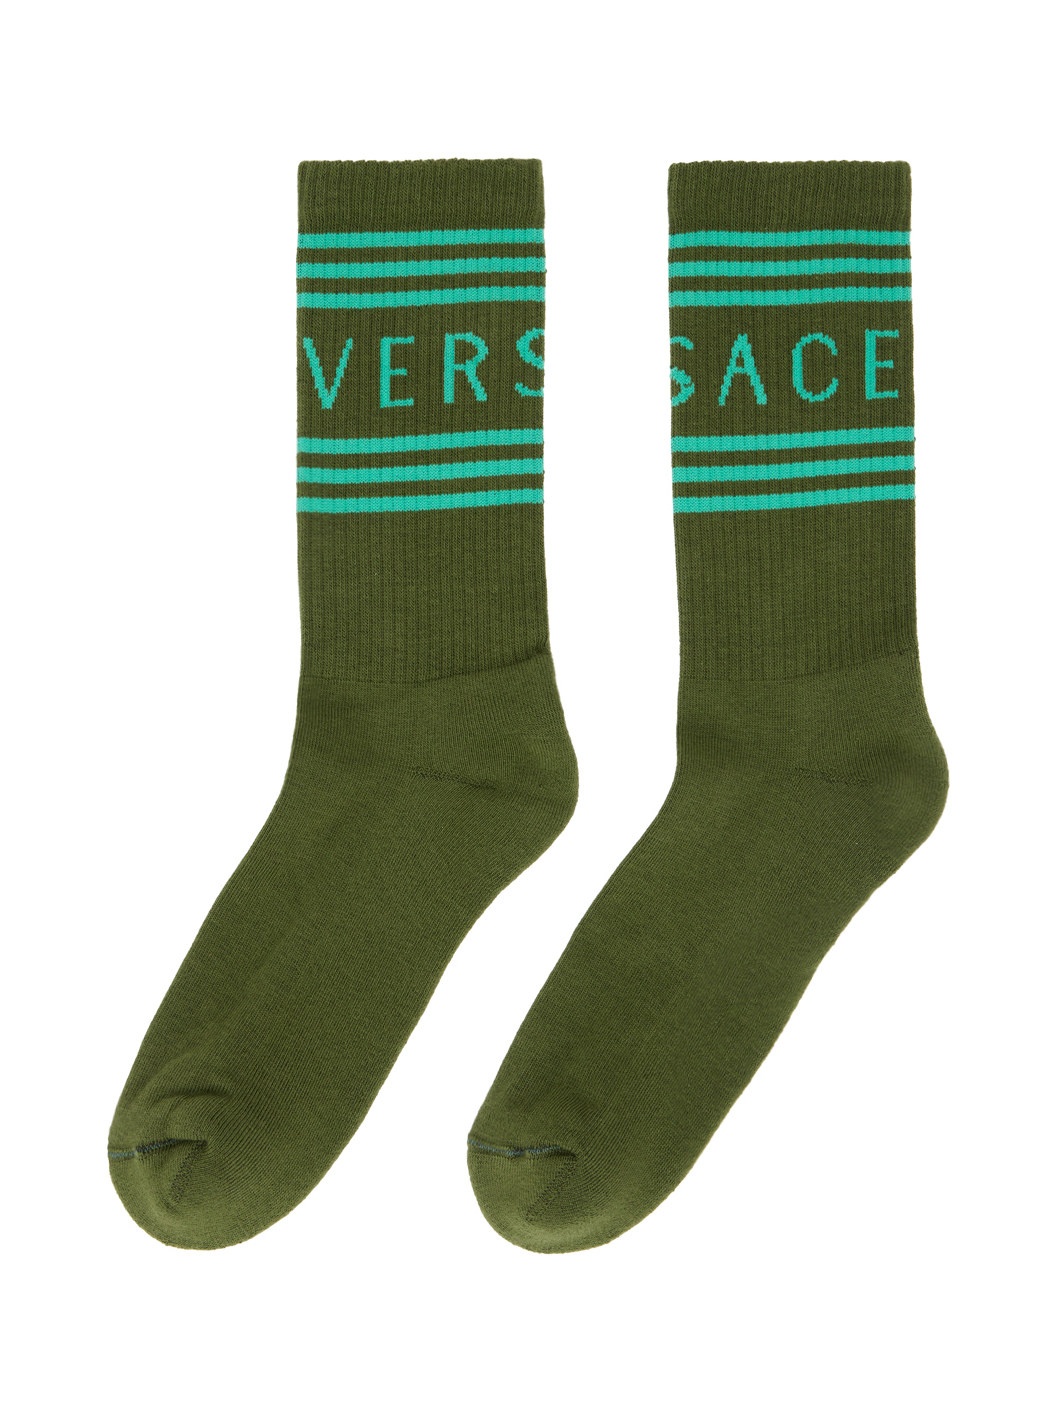 Green Athletic Socks - 2